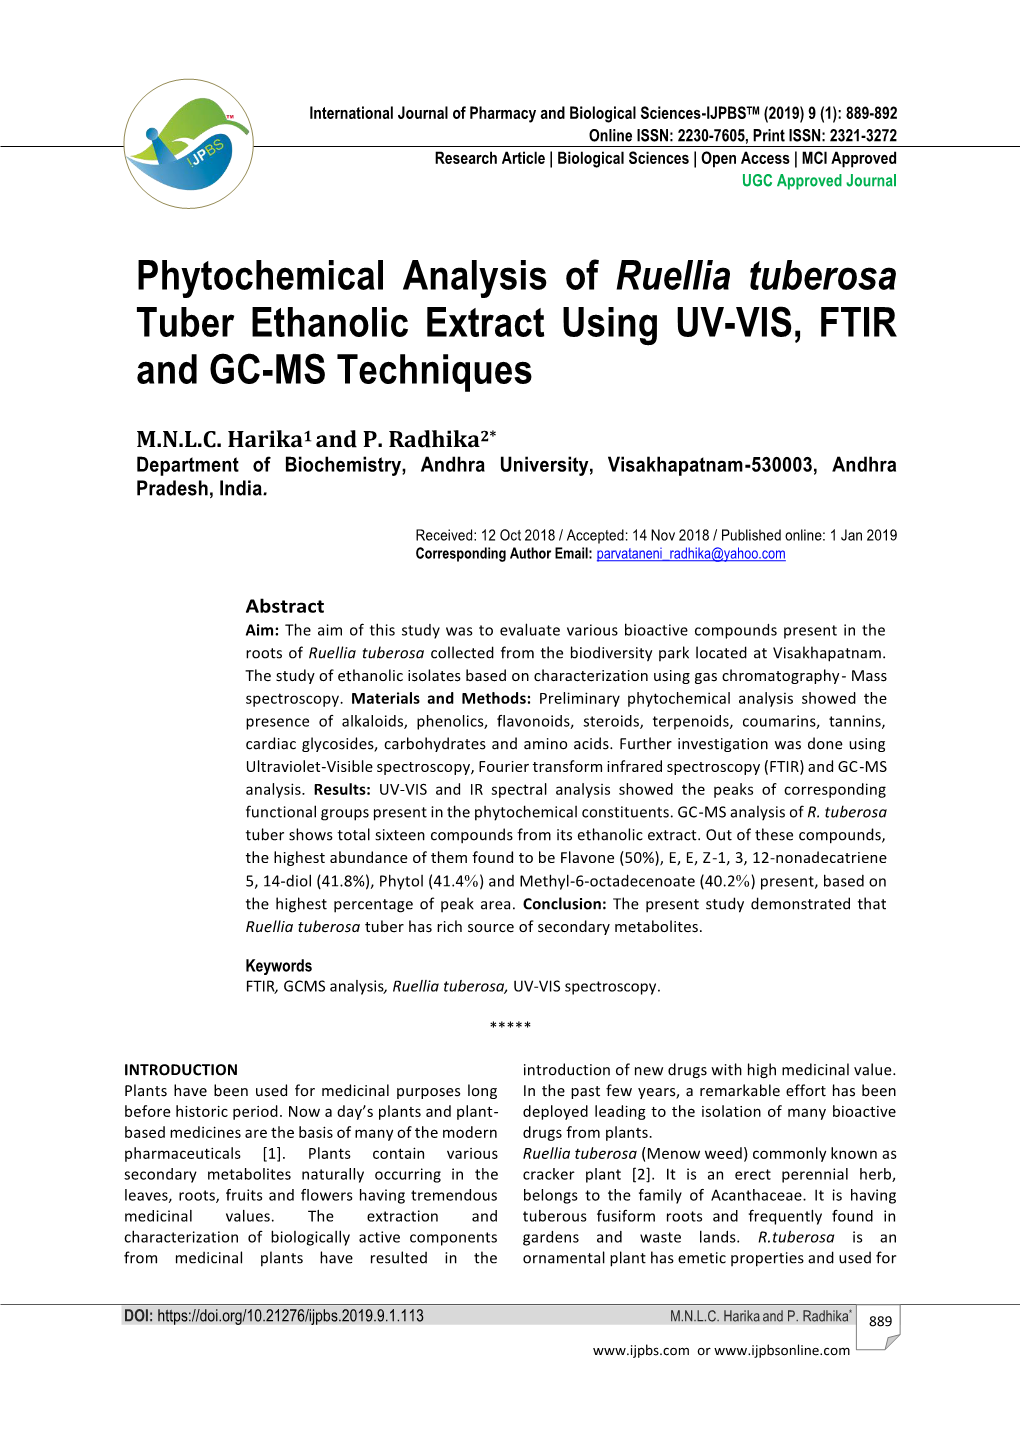 Phytochemical Analysis of Ruellia Tuberosa Tuber Ethanolic Extract Using UV-VIS, FTIR and GC-MS Techniques